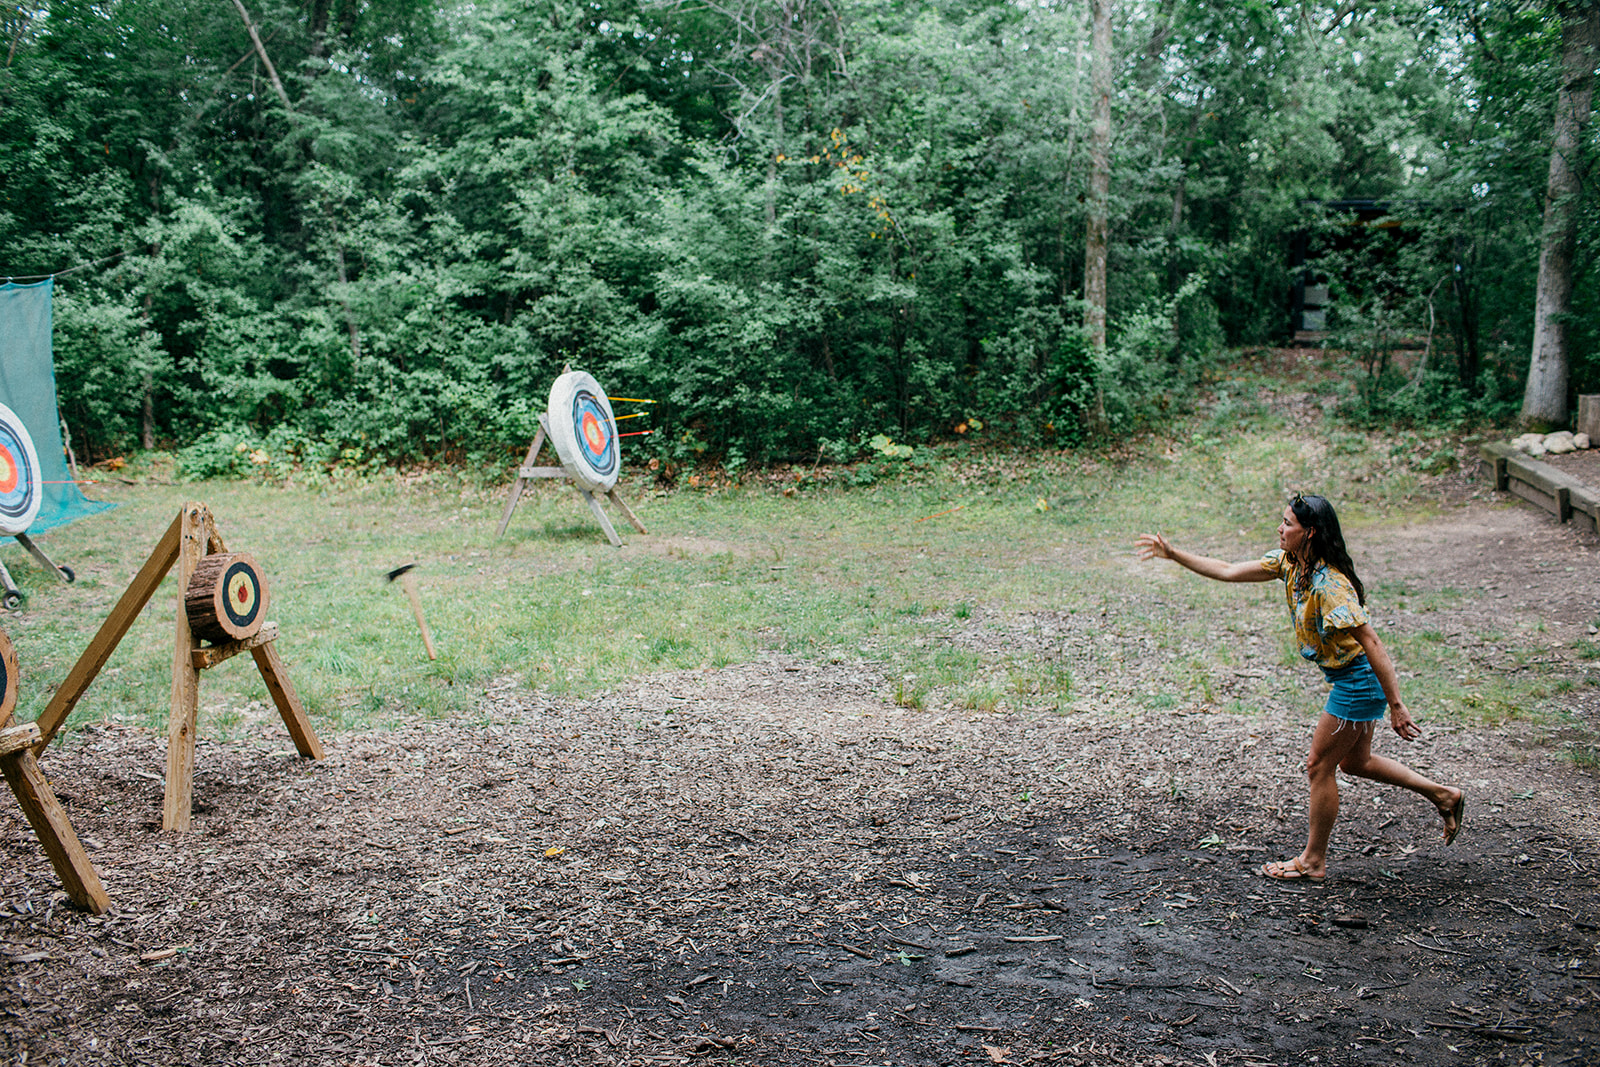 Hatchet and axe throwing at Camp Wandawega during a wellness wedding weekend